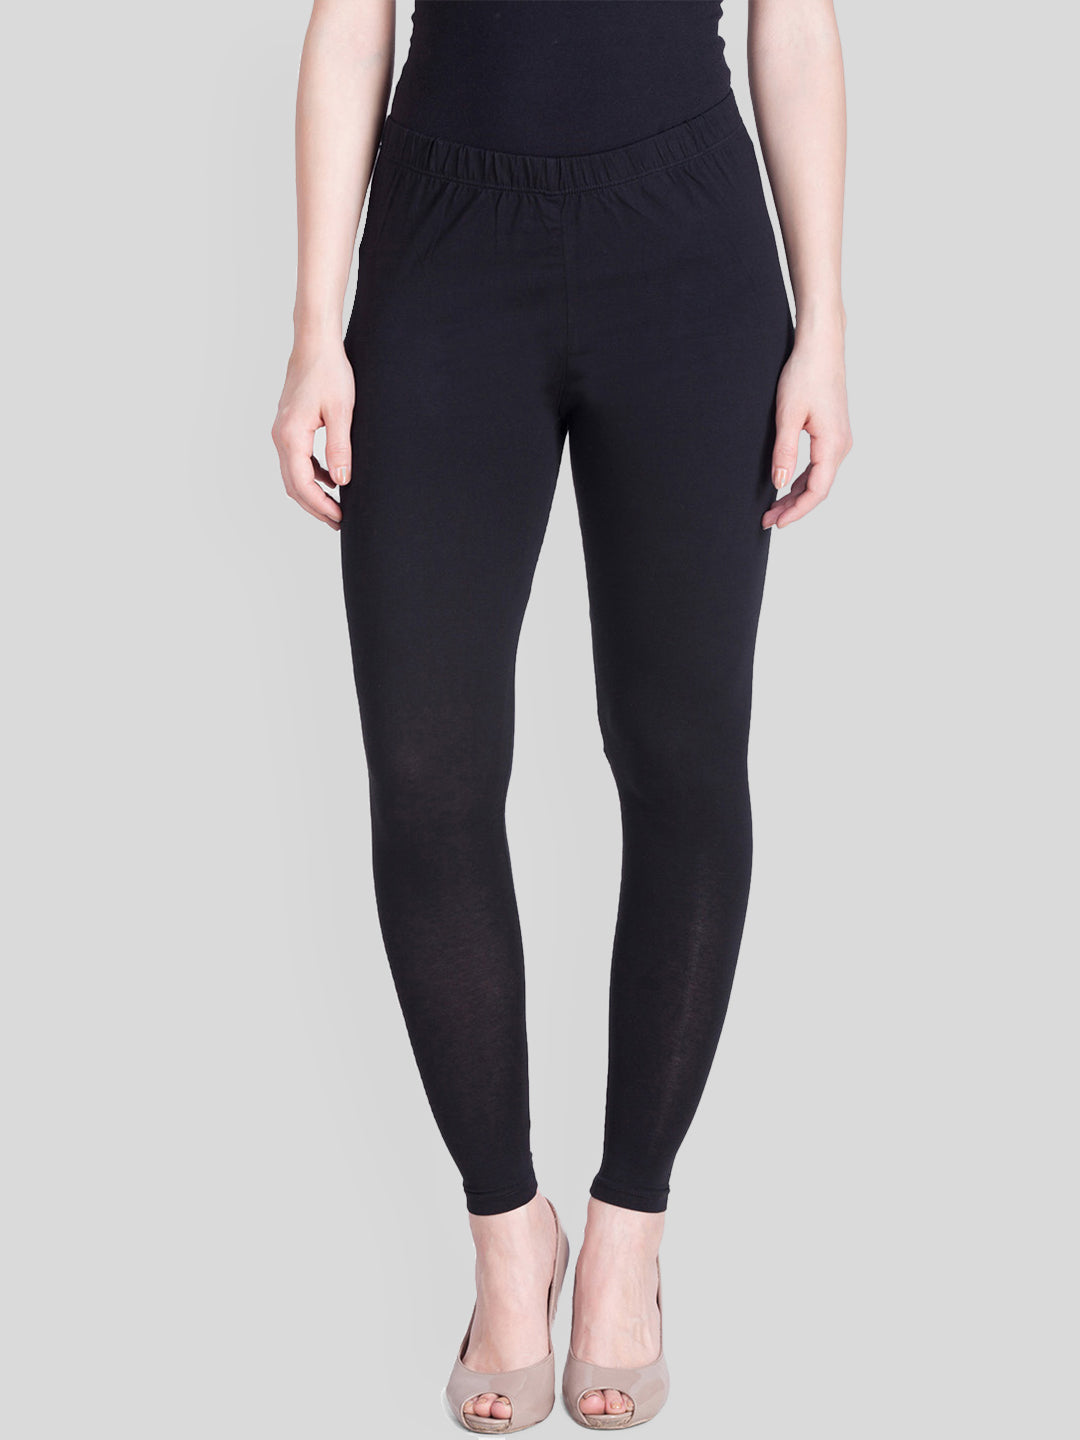 Black Lycra/Spandex Women's Pants & Trousers - Macy's